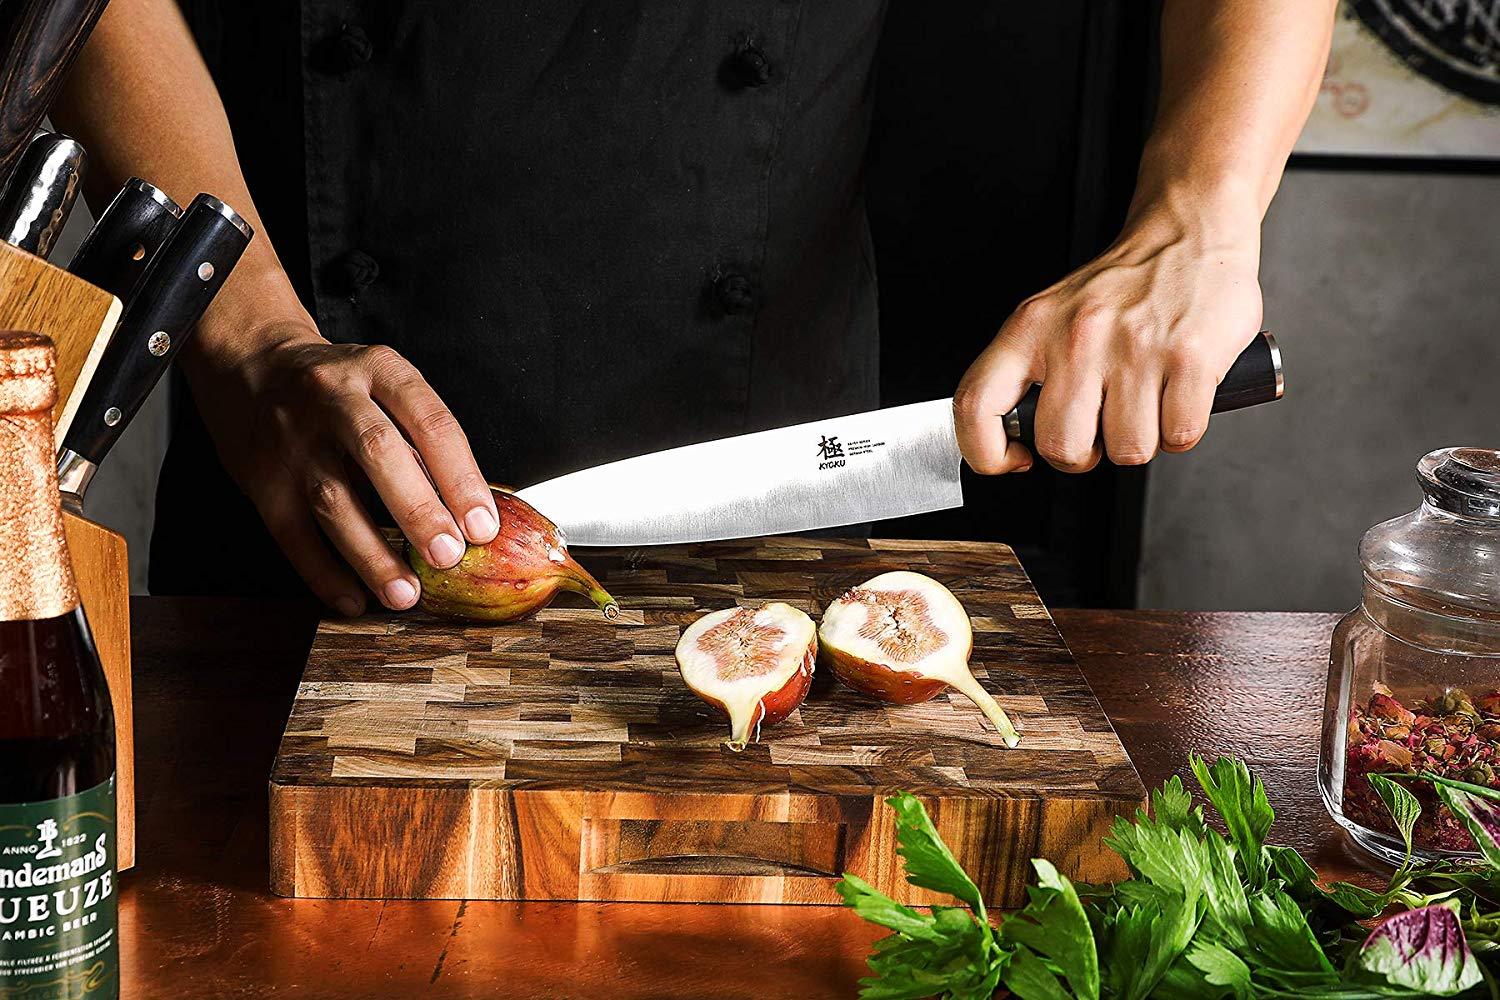 Kyoku 4pcs 5’’ Non-Serrated Steak Knives, Ichiban Japanese Steel